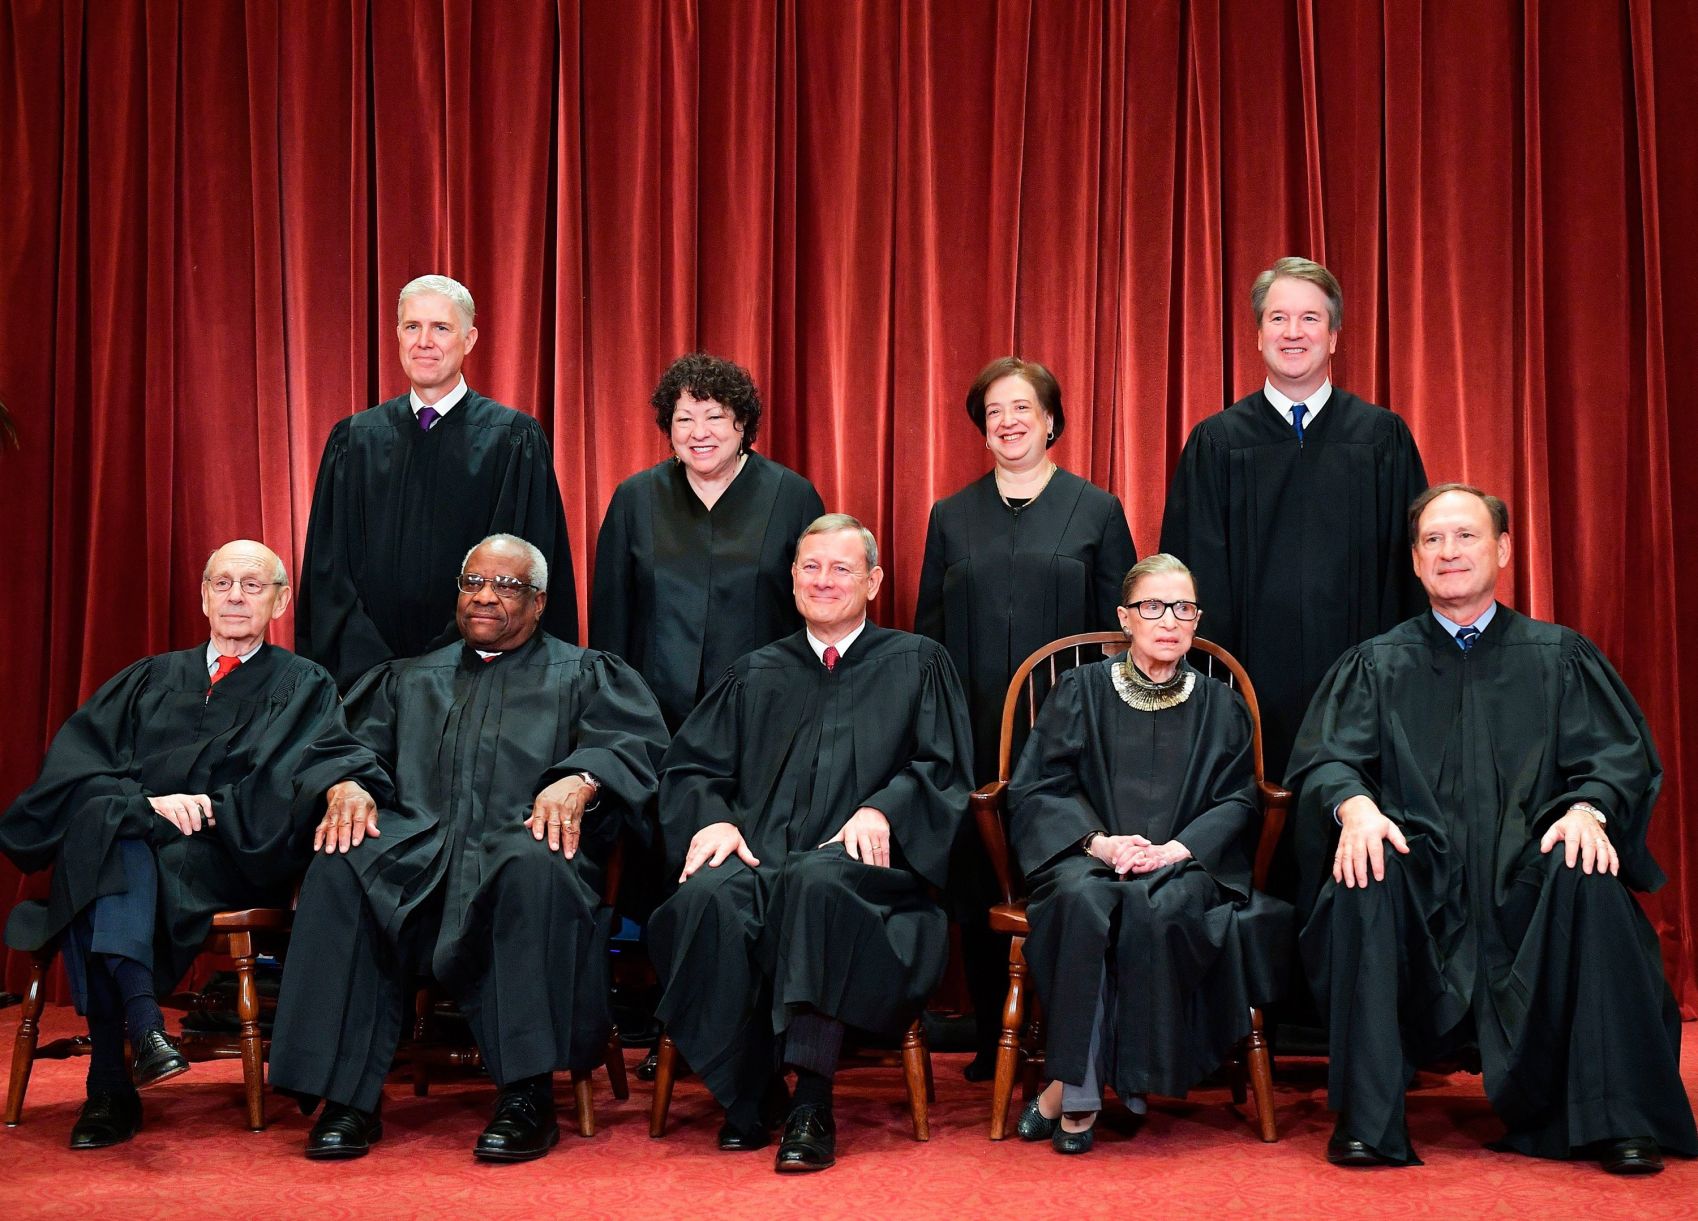 worst supreme court decisions 2013